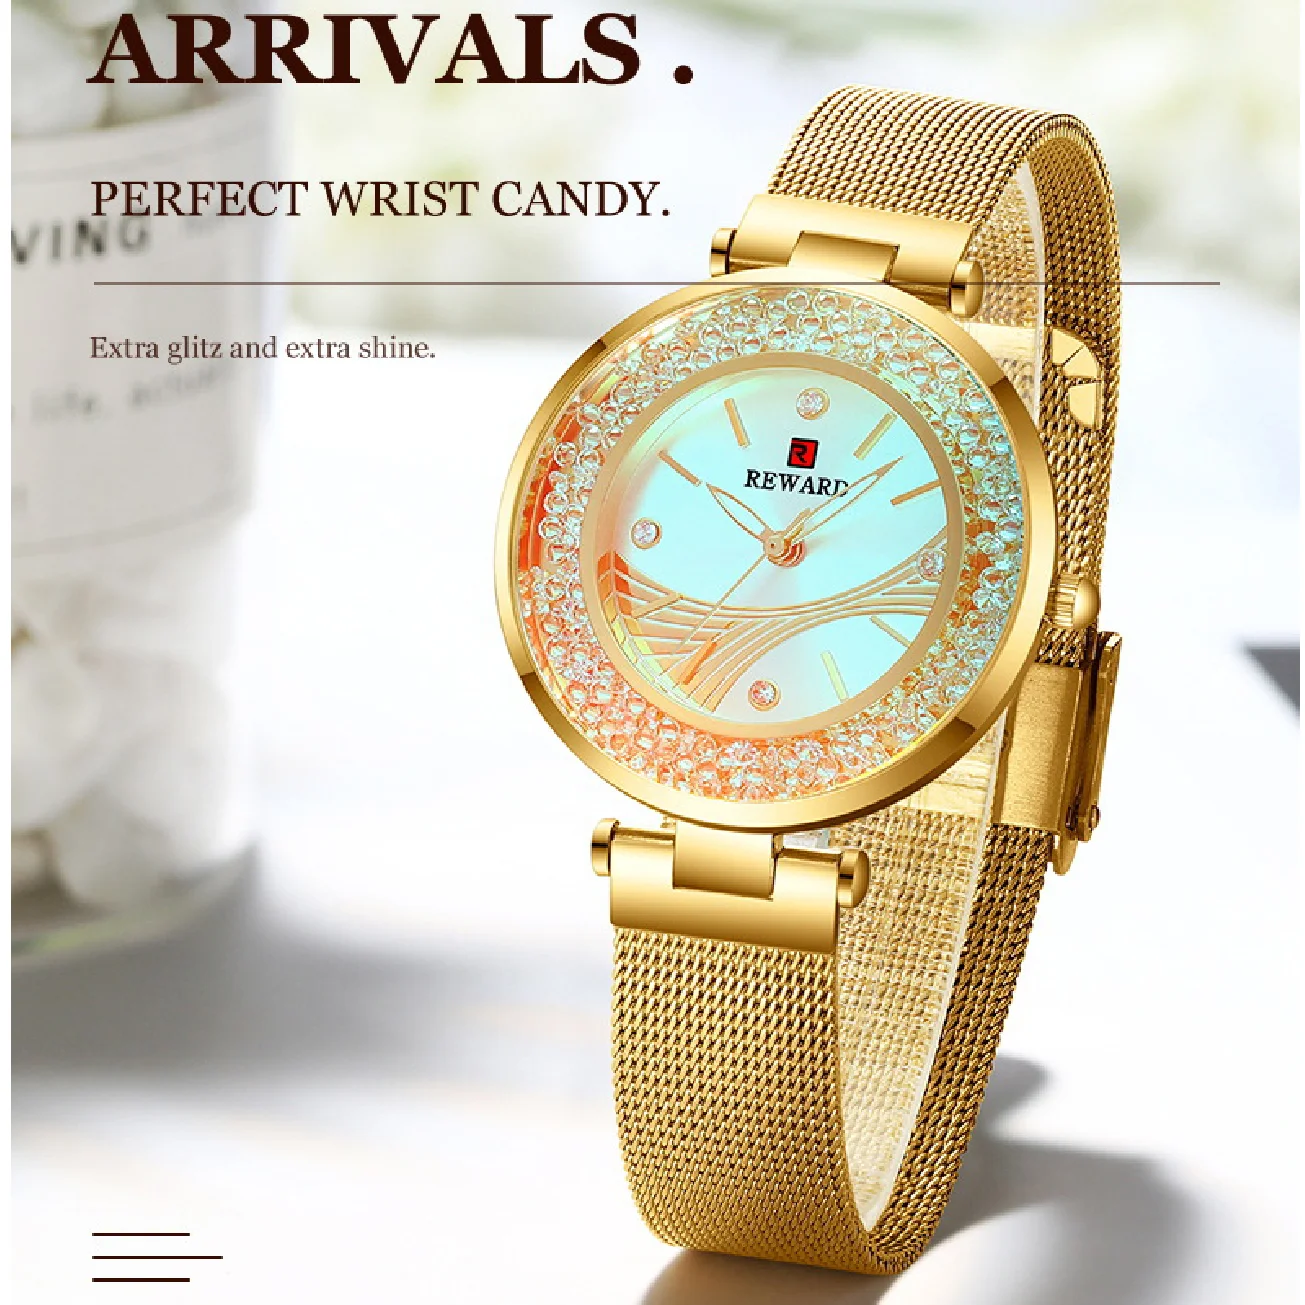 REWARD Women Watch Diamond Dial Luxury Brand Stainless Steel Ladies Trend Quartz Wrist Watches Waterproof Clock Female Gifts enlarge